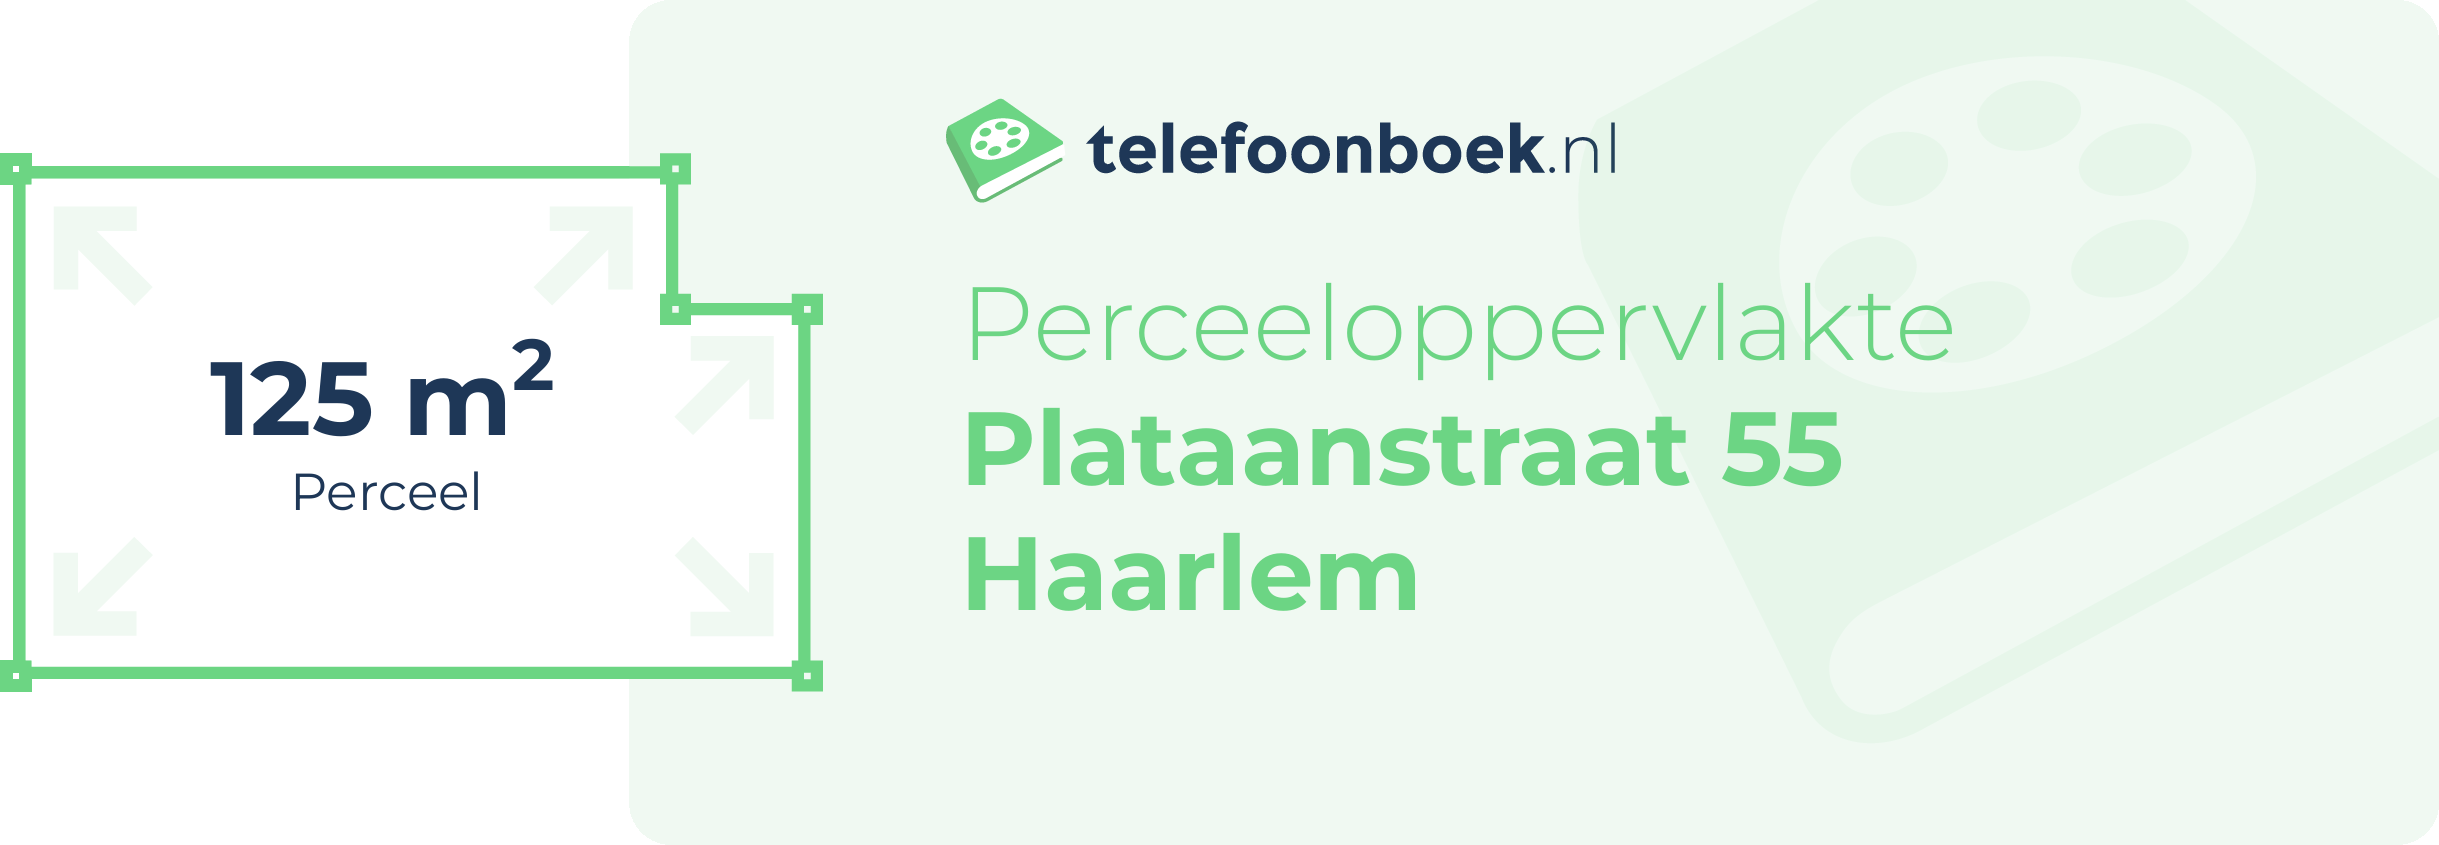 Perceeloppervlakte Plataanstraat 55 Haarlem